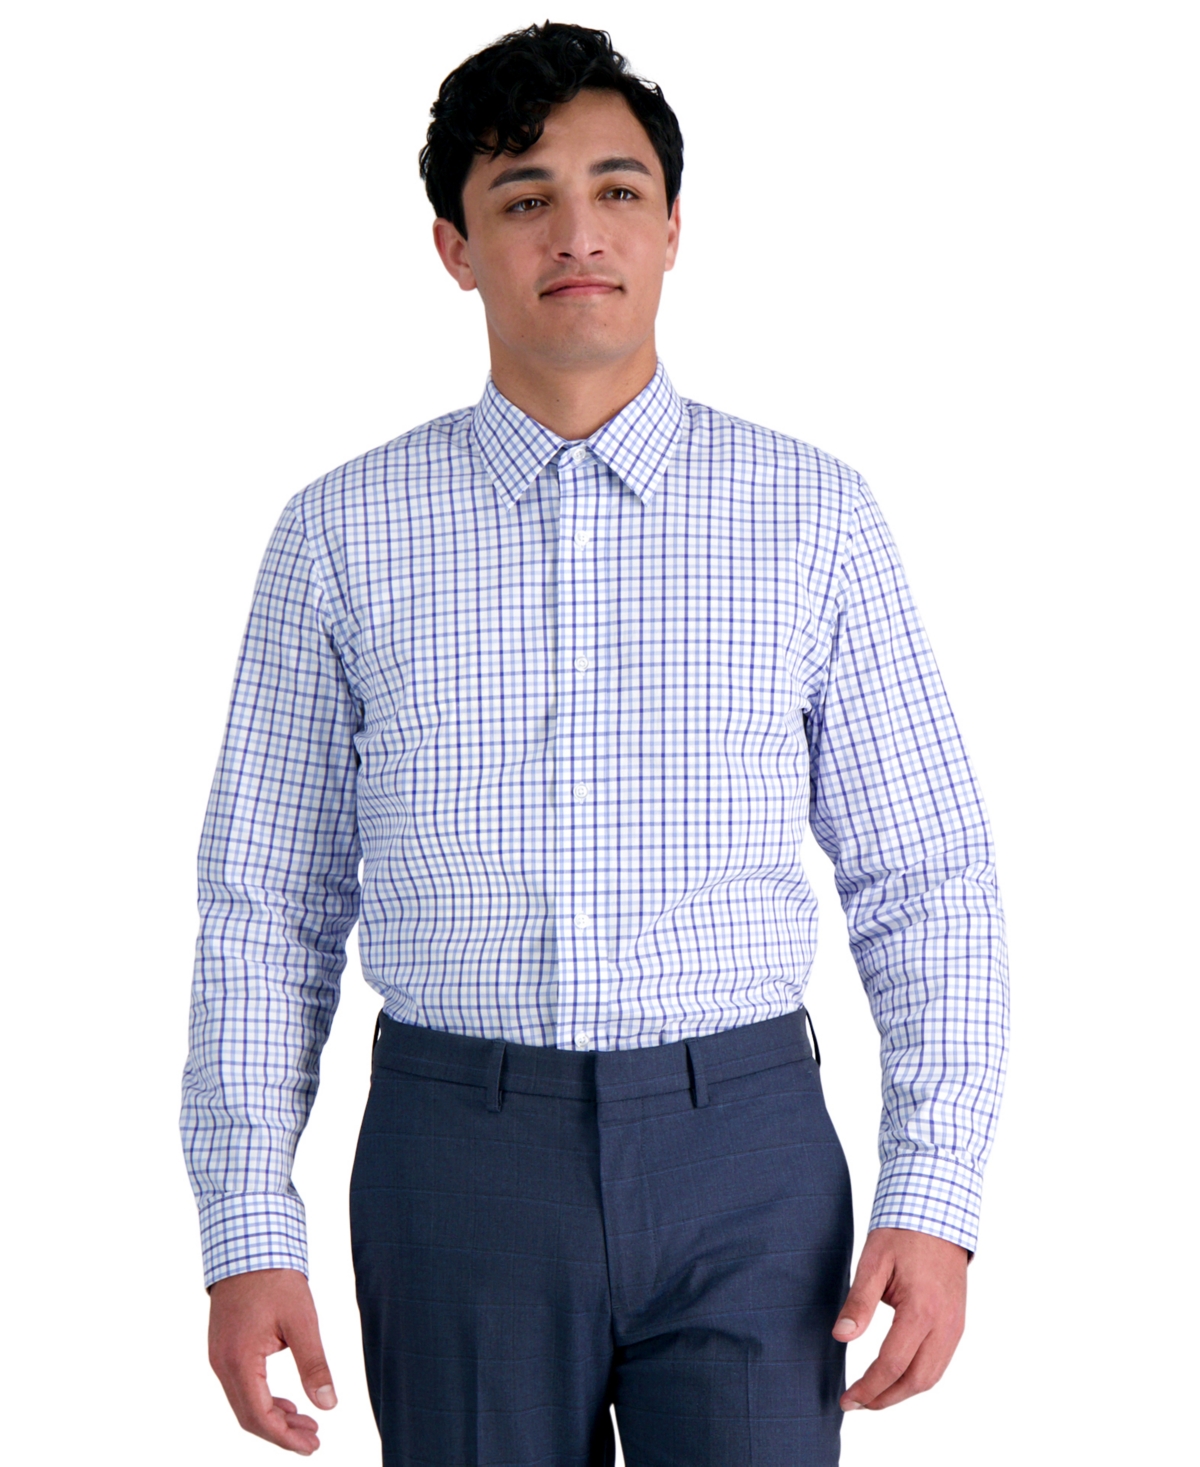 Men's Premium Comfort Slim Fit Dress Shirt - Mini Blue Dobby